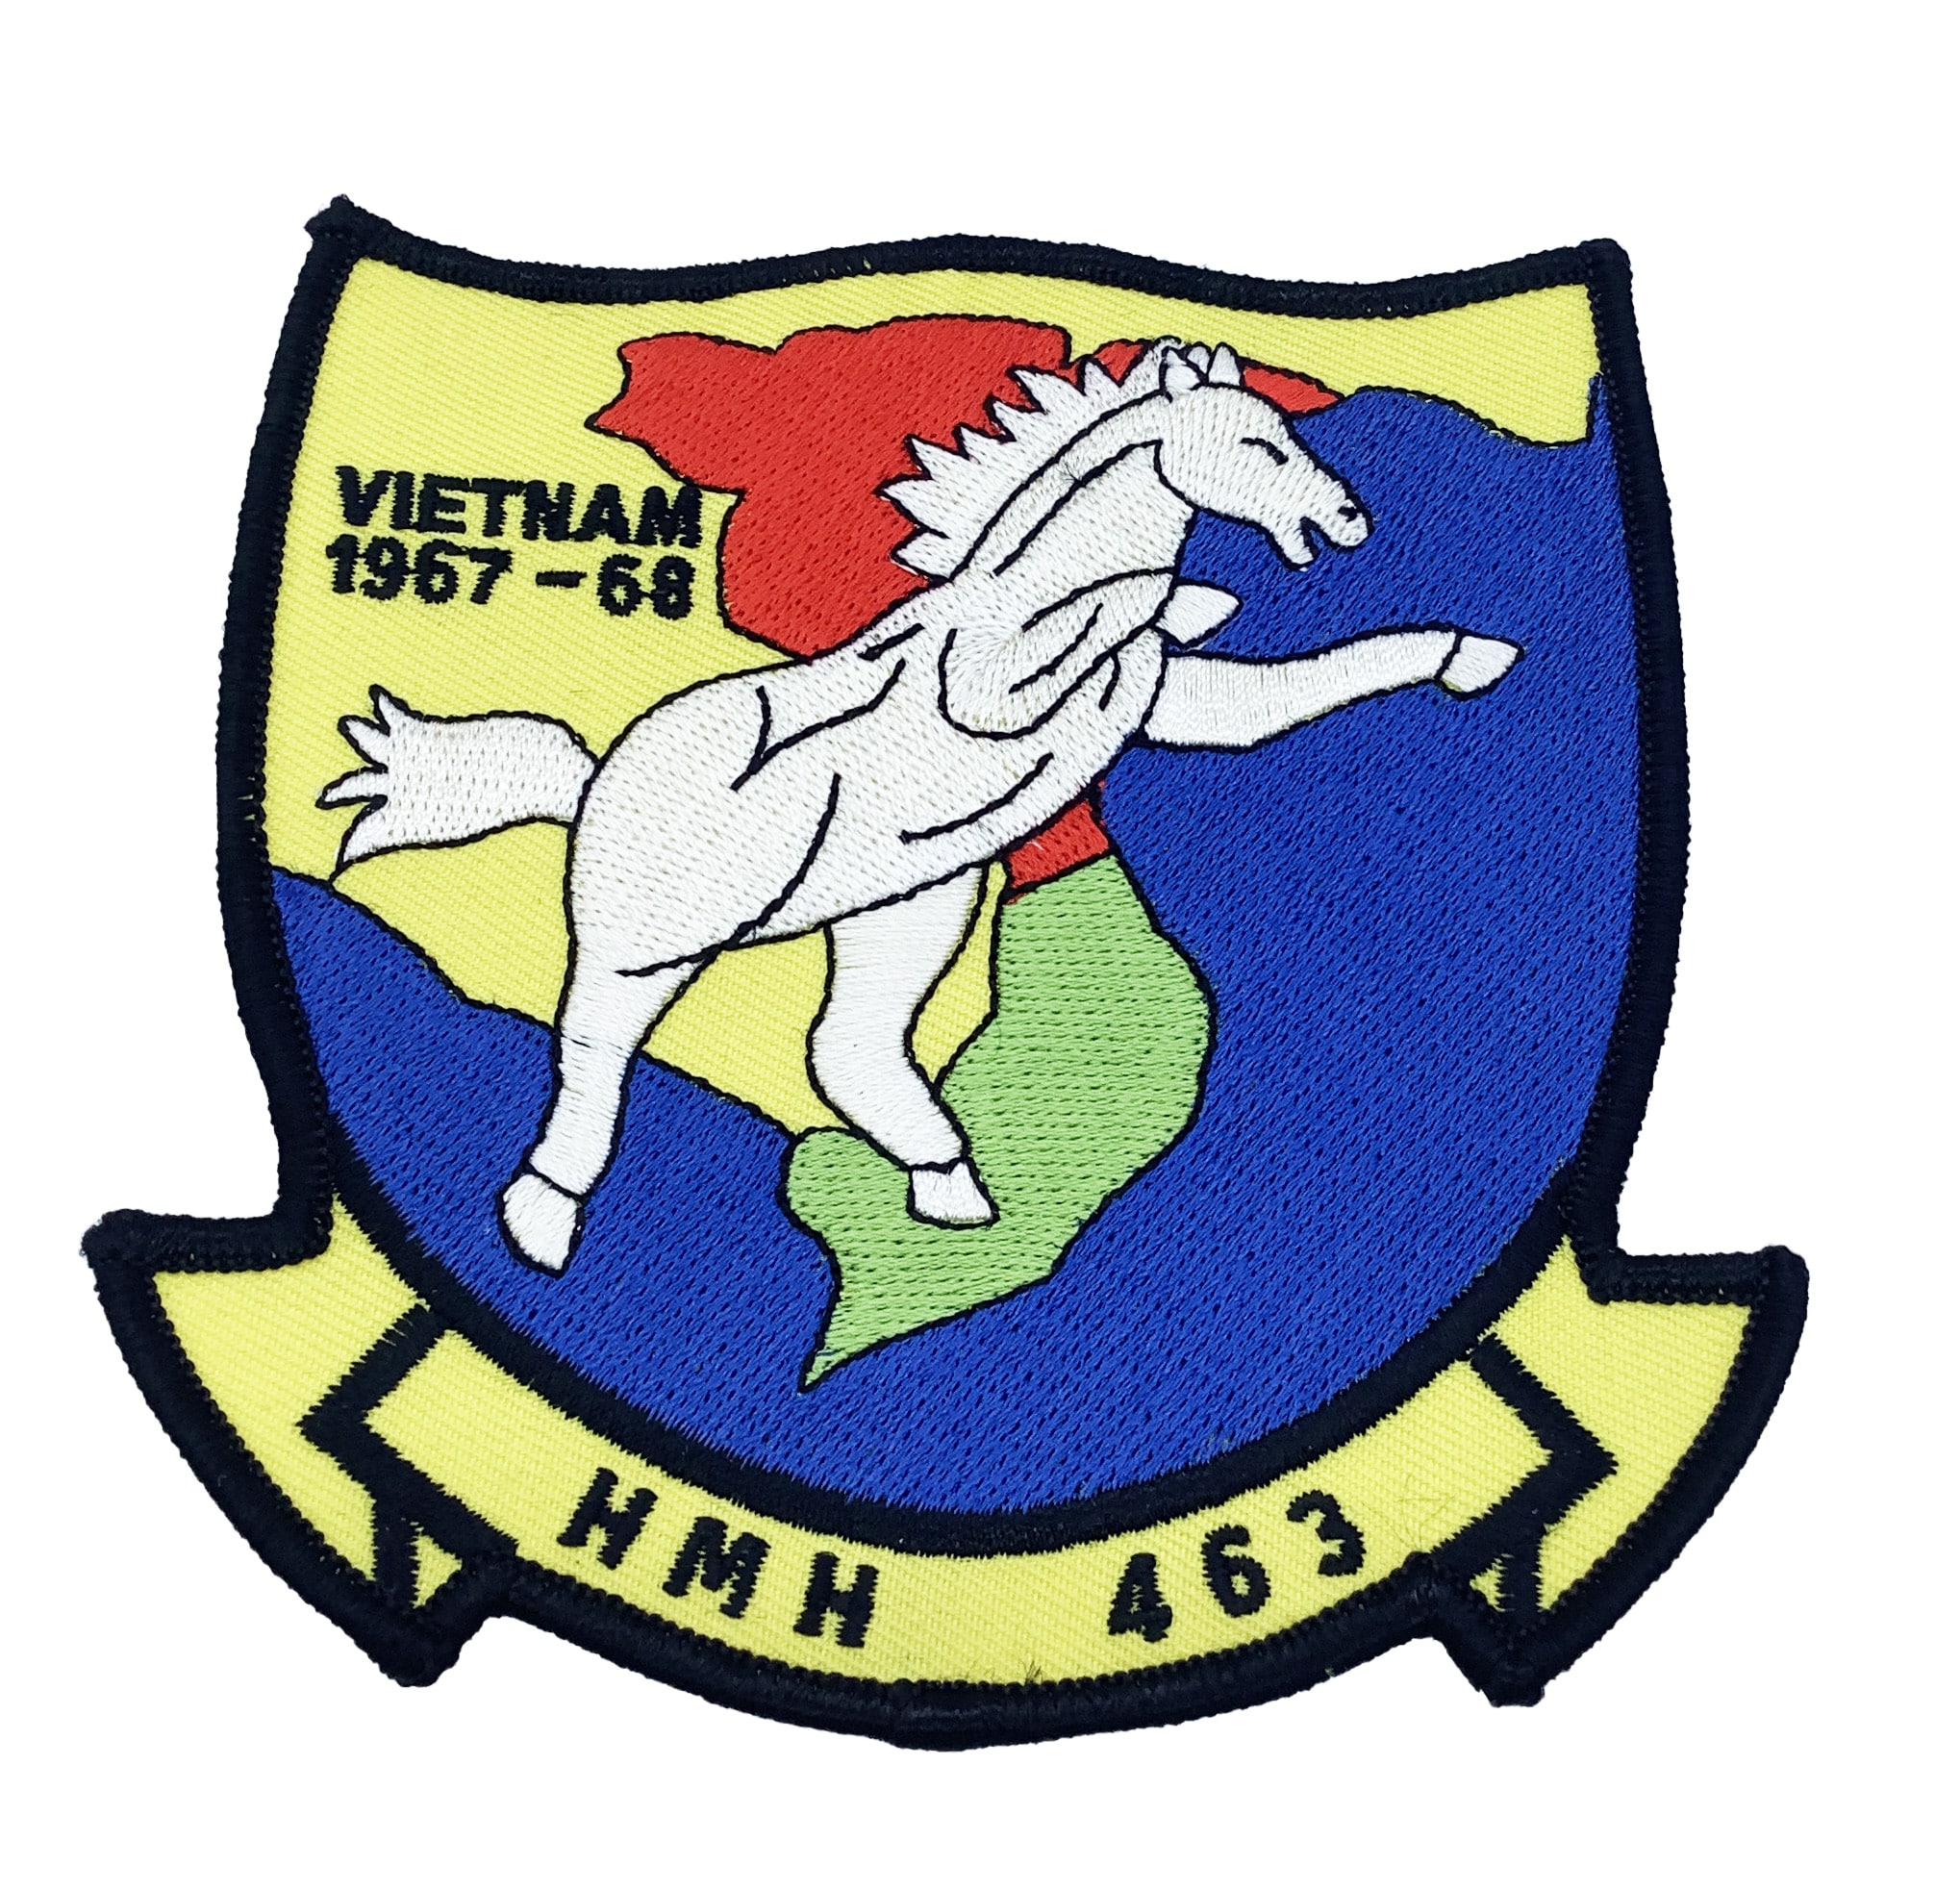 HMH-463 Pegasus Vietnam Patch- No Hook and Loop